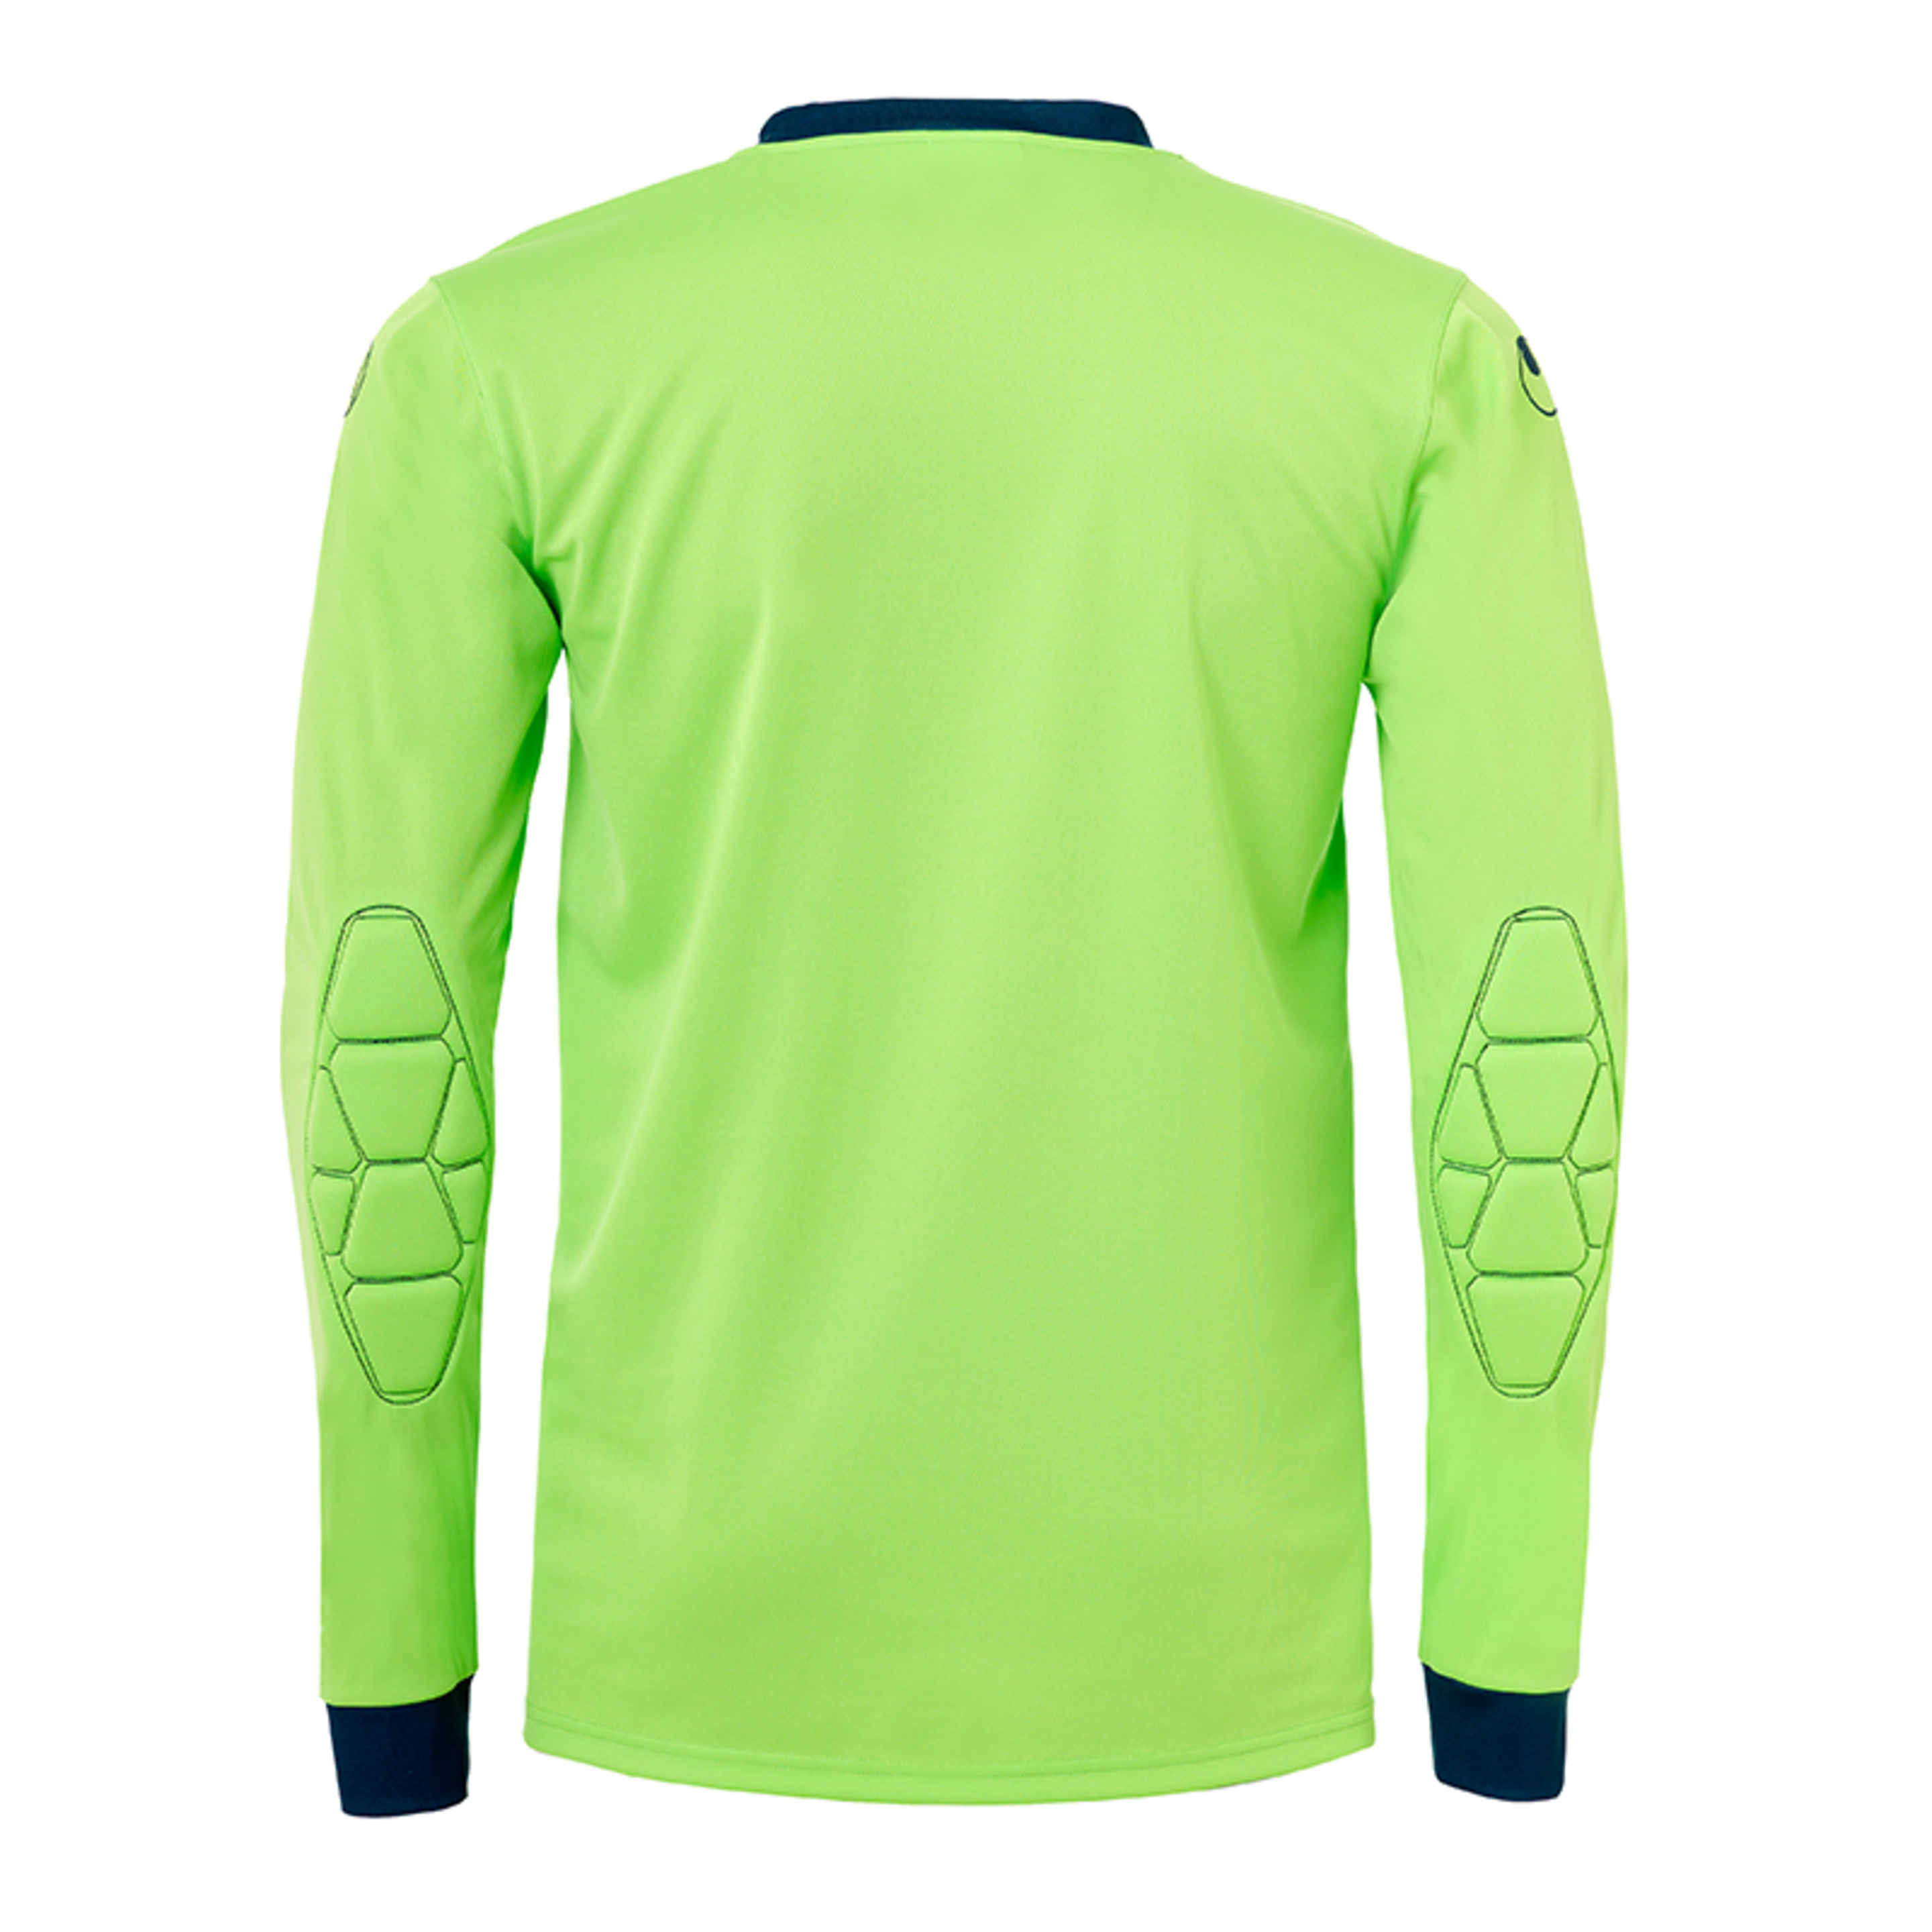 Goal Camiseta De Portero Ml Verde Flash/petróleo Uhlsport